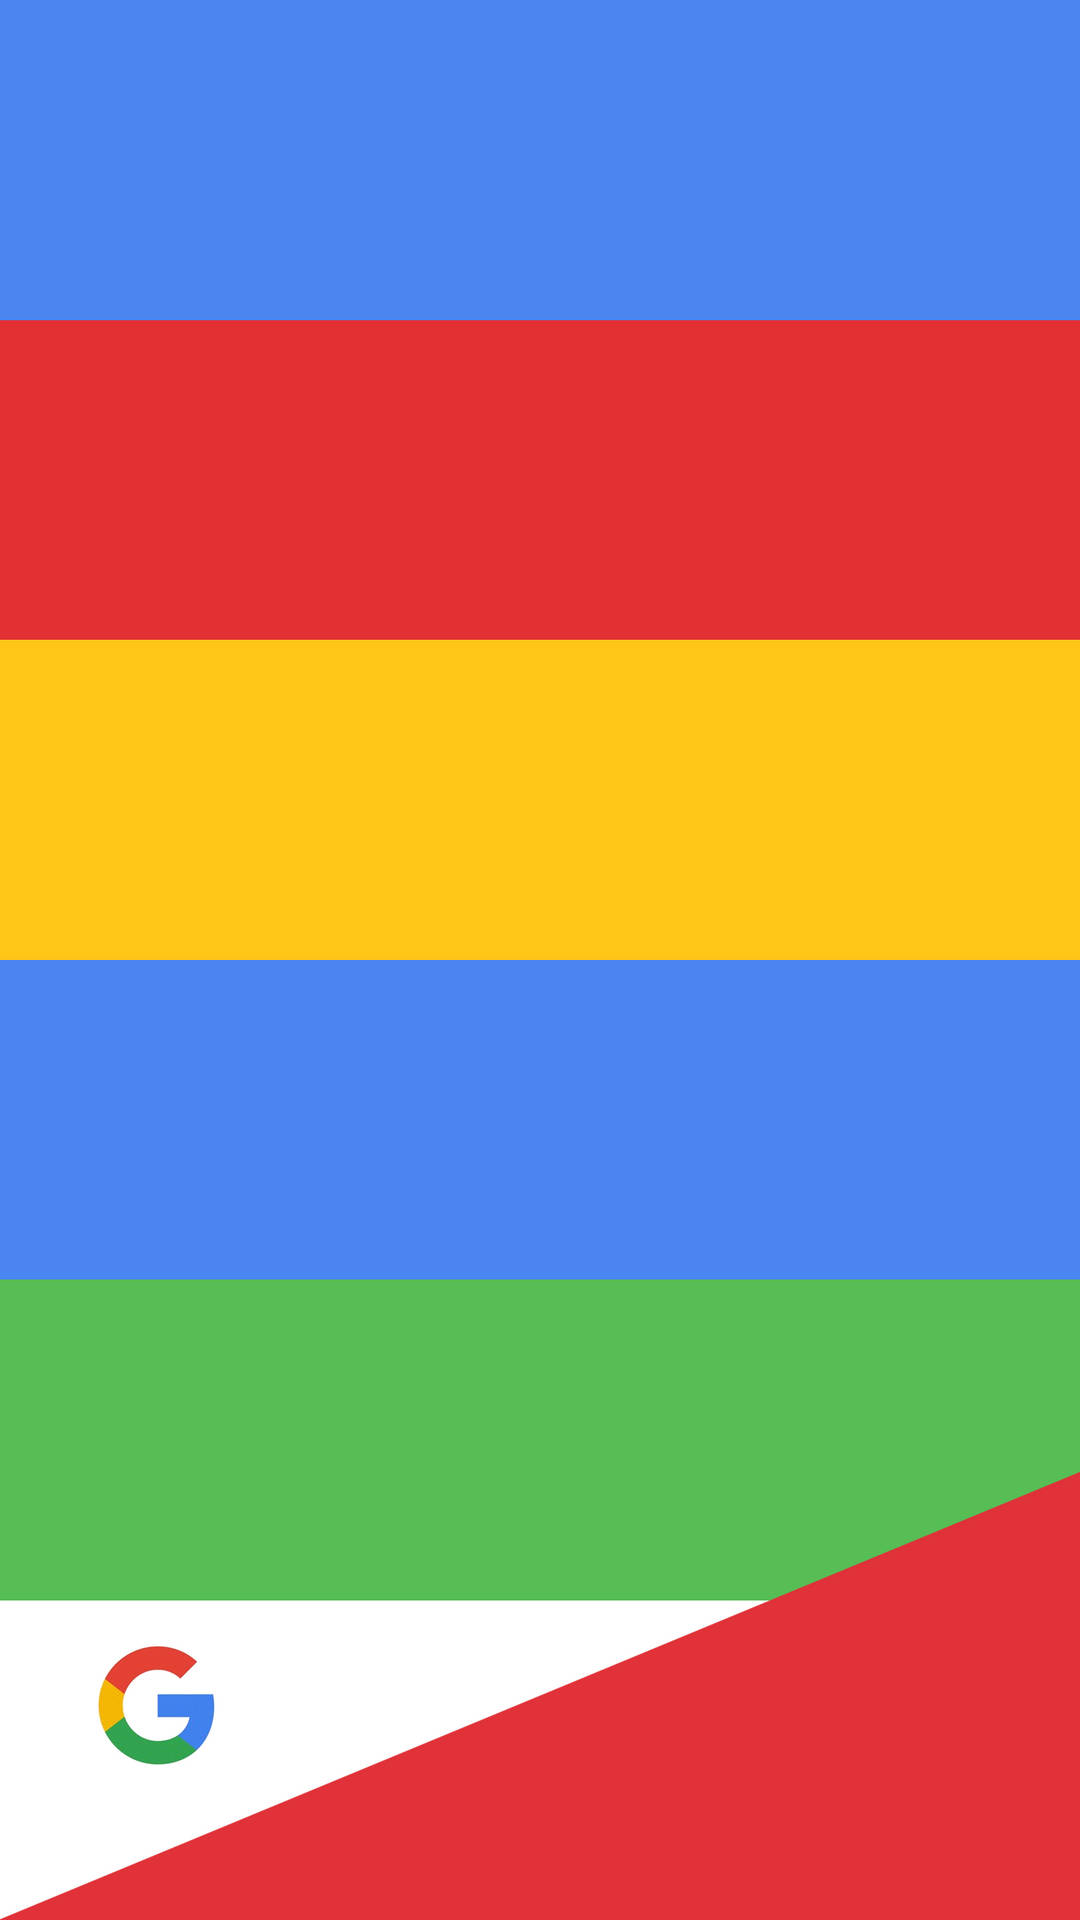 Google Colors Horizontal Stripes Background